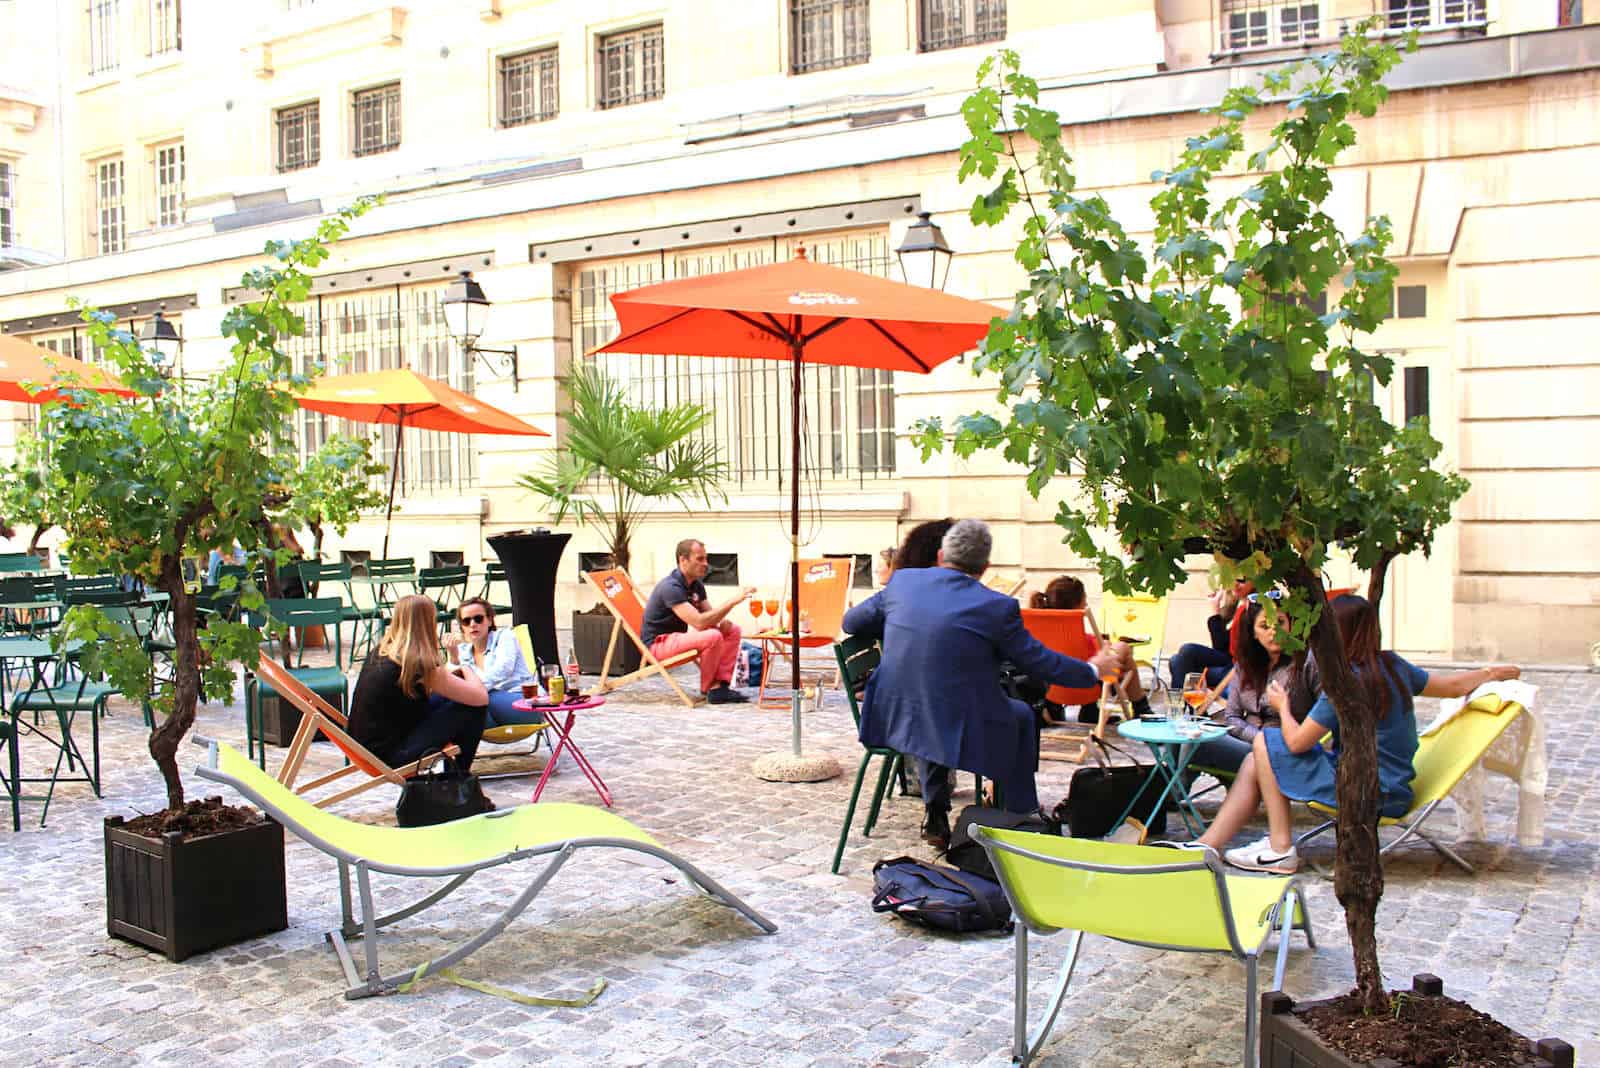 Café Cour: A Hidden Terrace in Paris' Marais